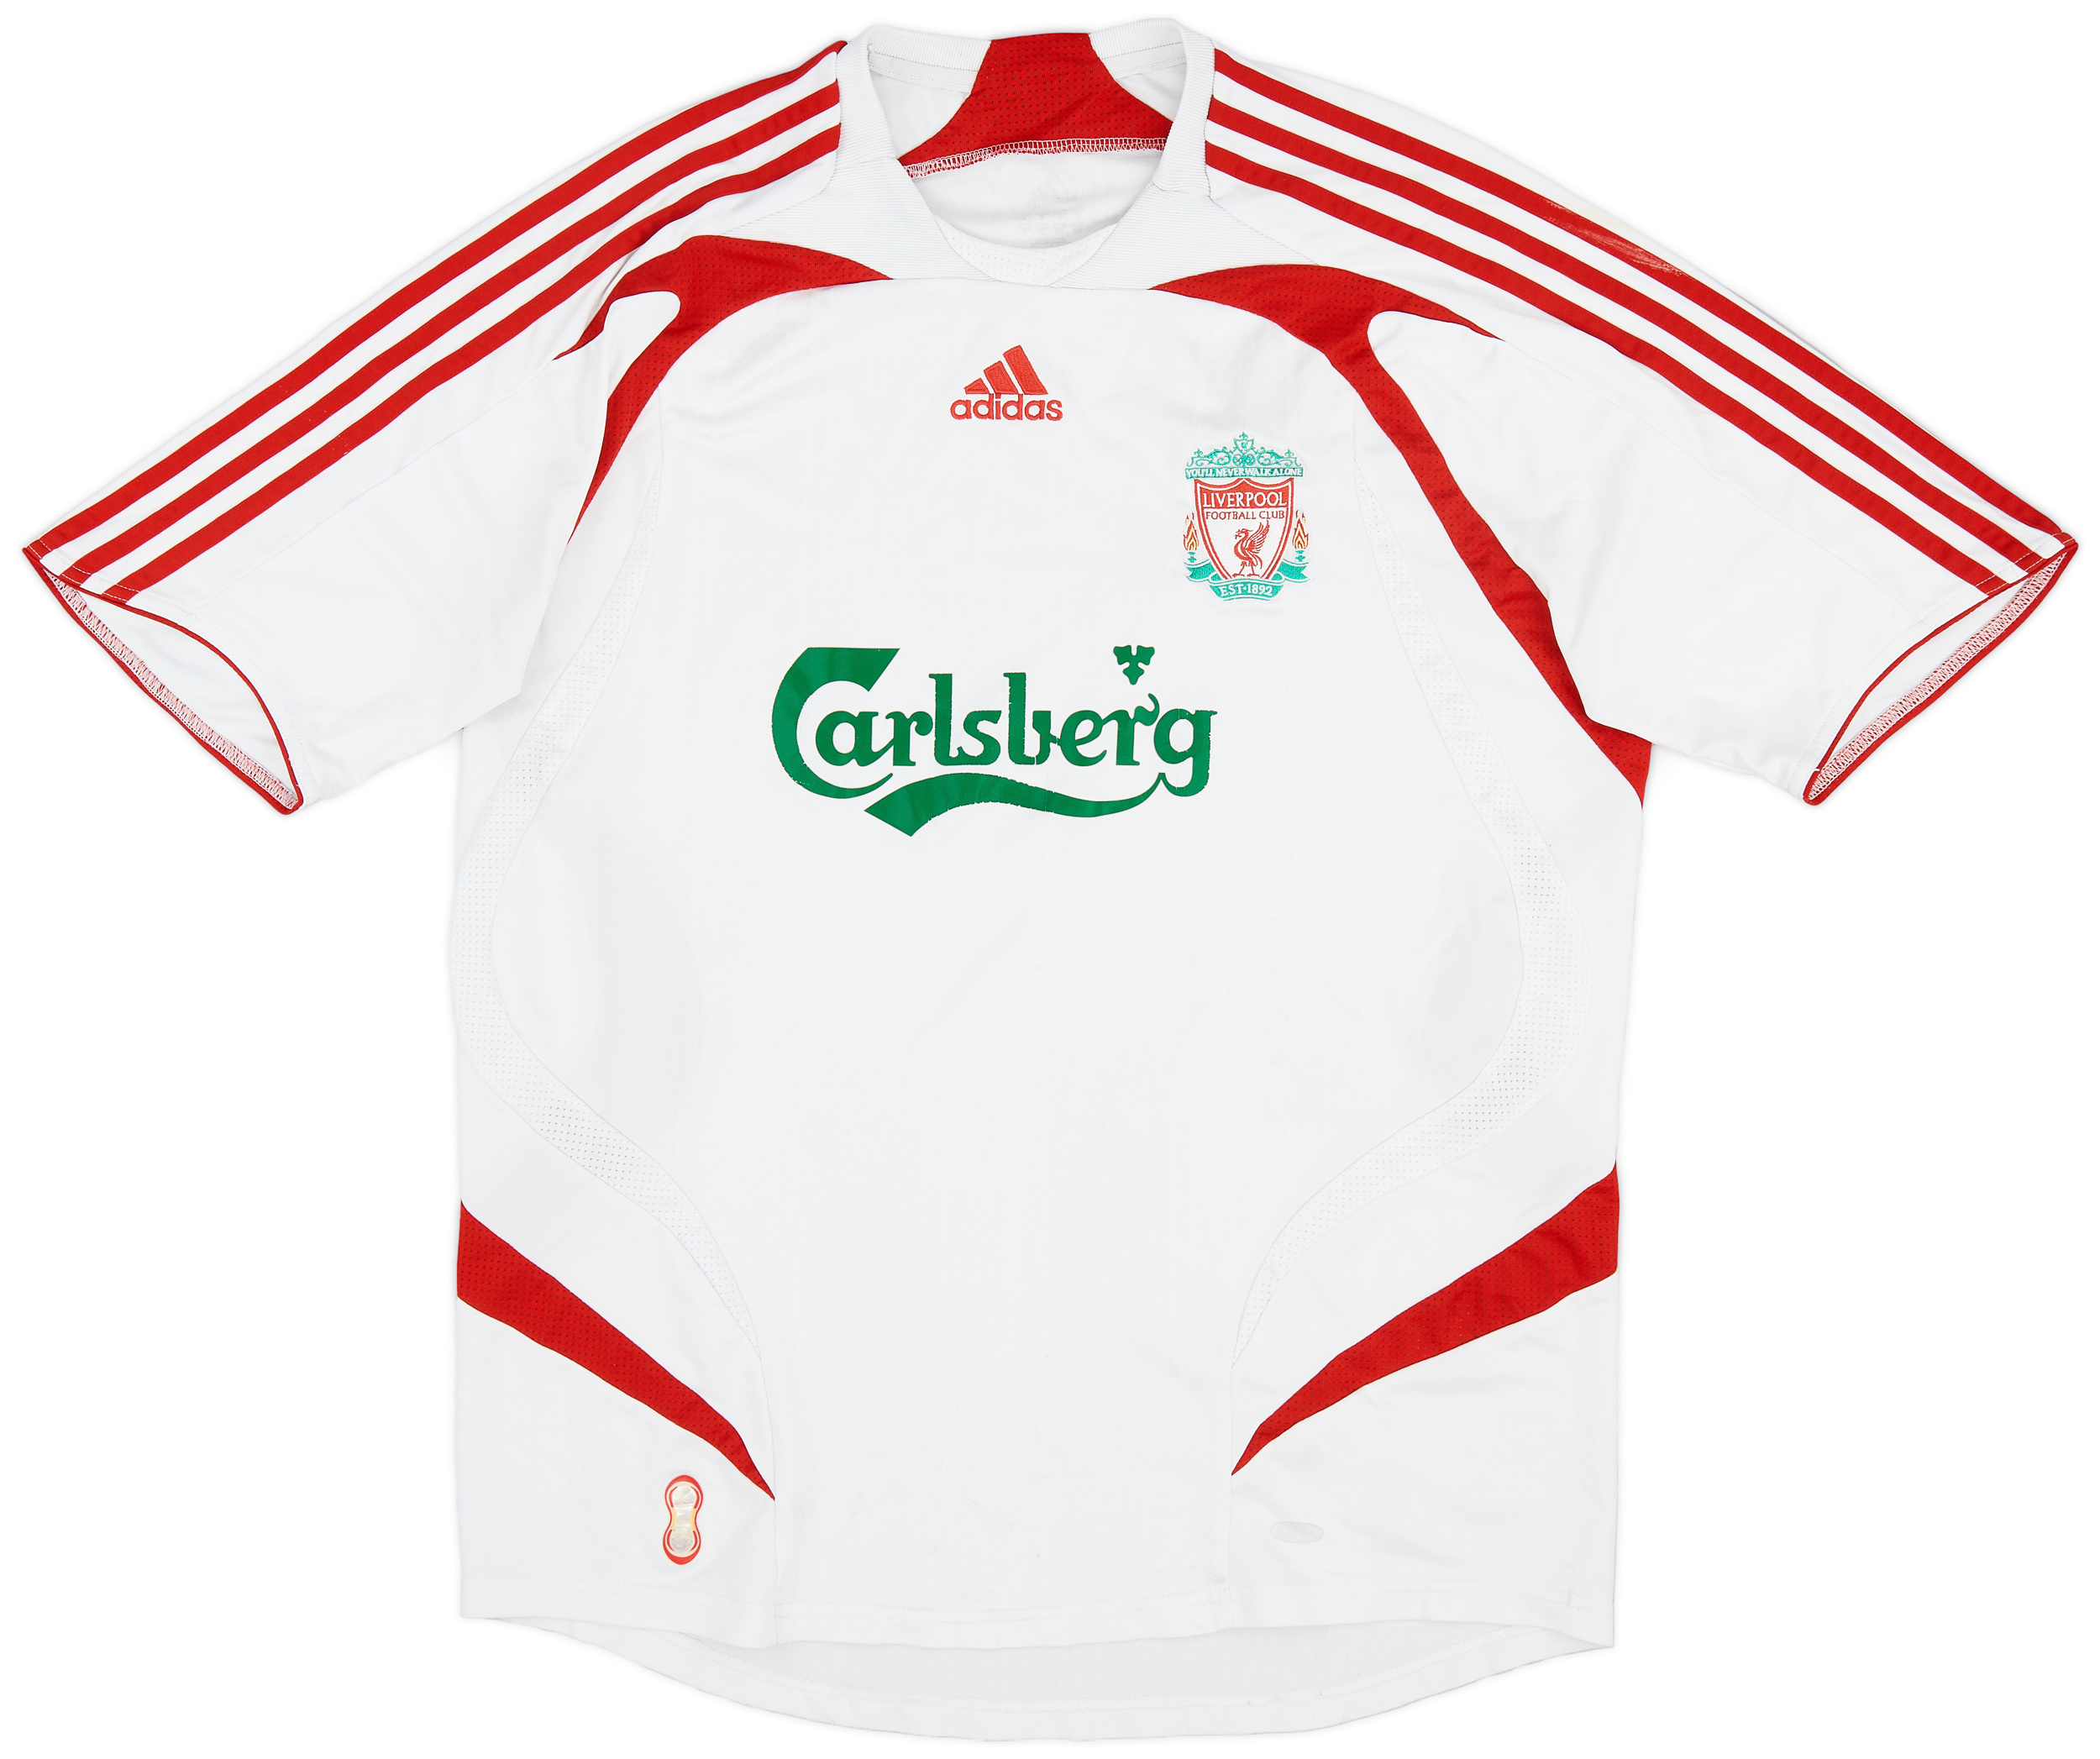 2007-08 Liverpool Away Shirt - 5/10 - ()